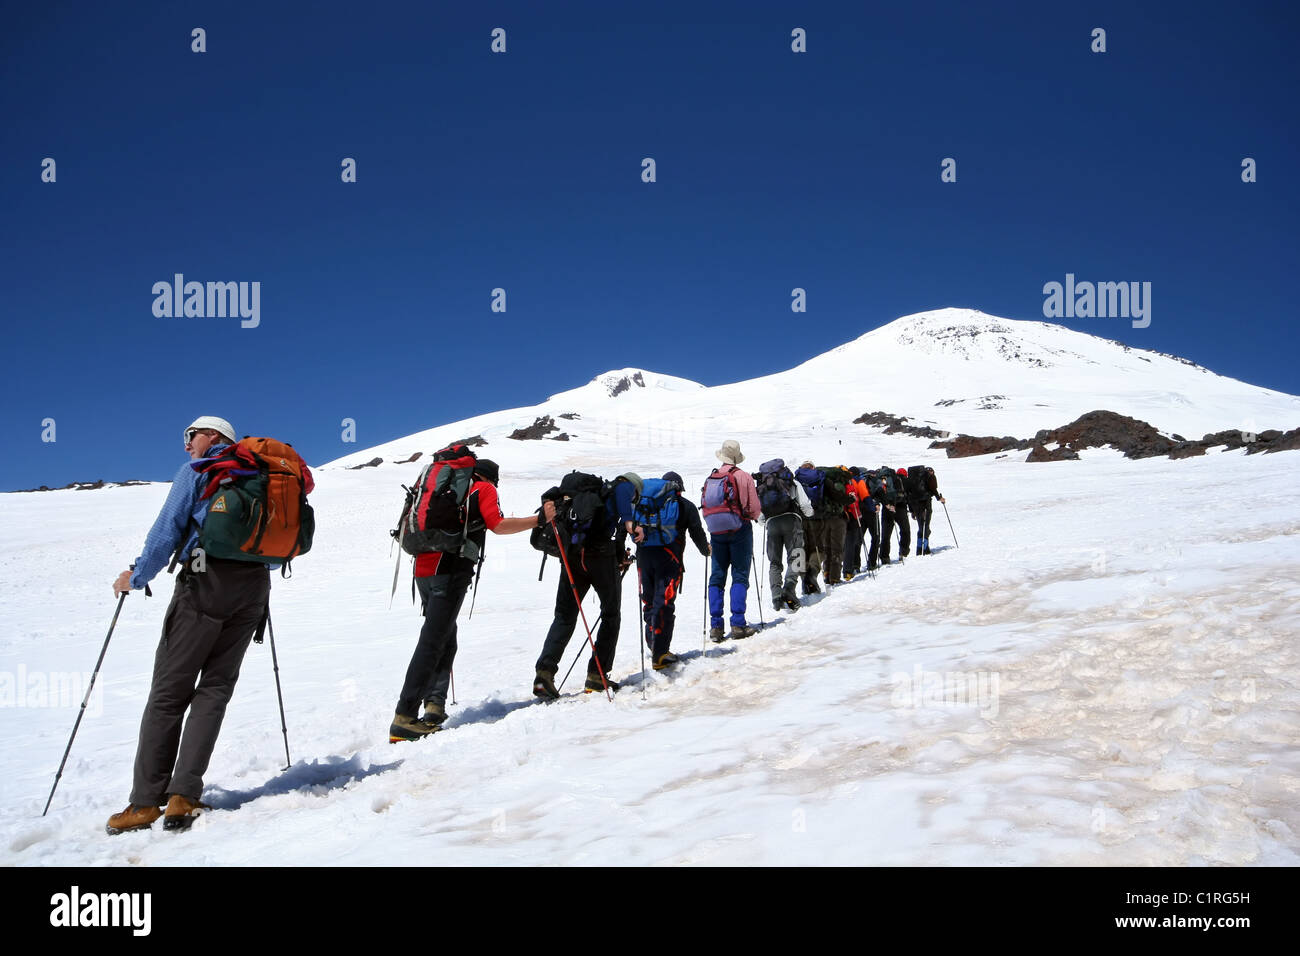 Alpinists at the Elbrus climbing in Caucasus mountains. Caucasus mountains. Russia. Stock Photo